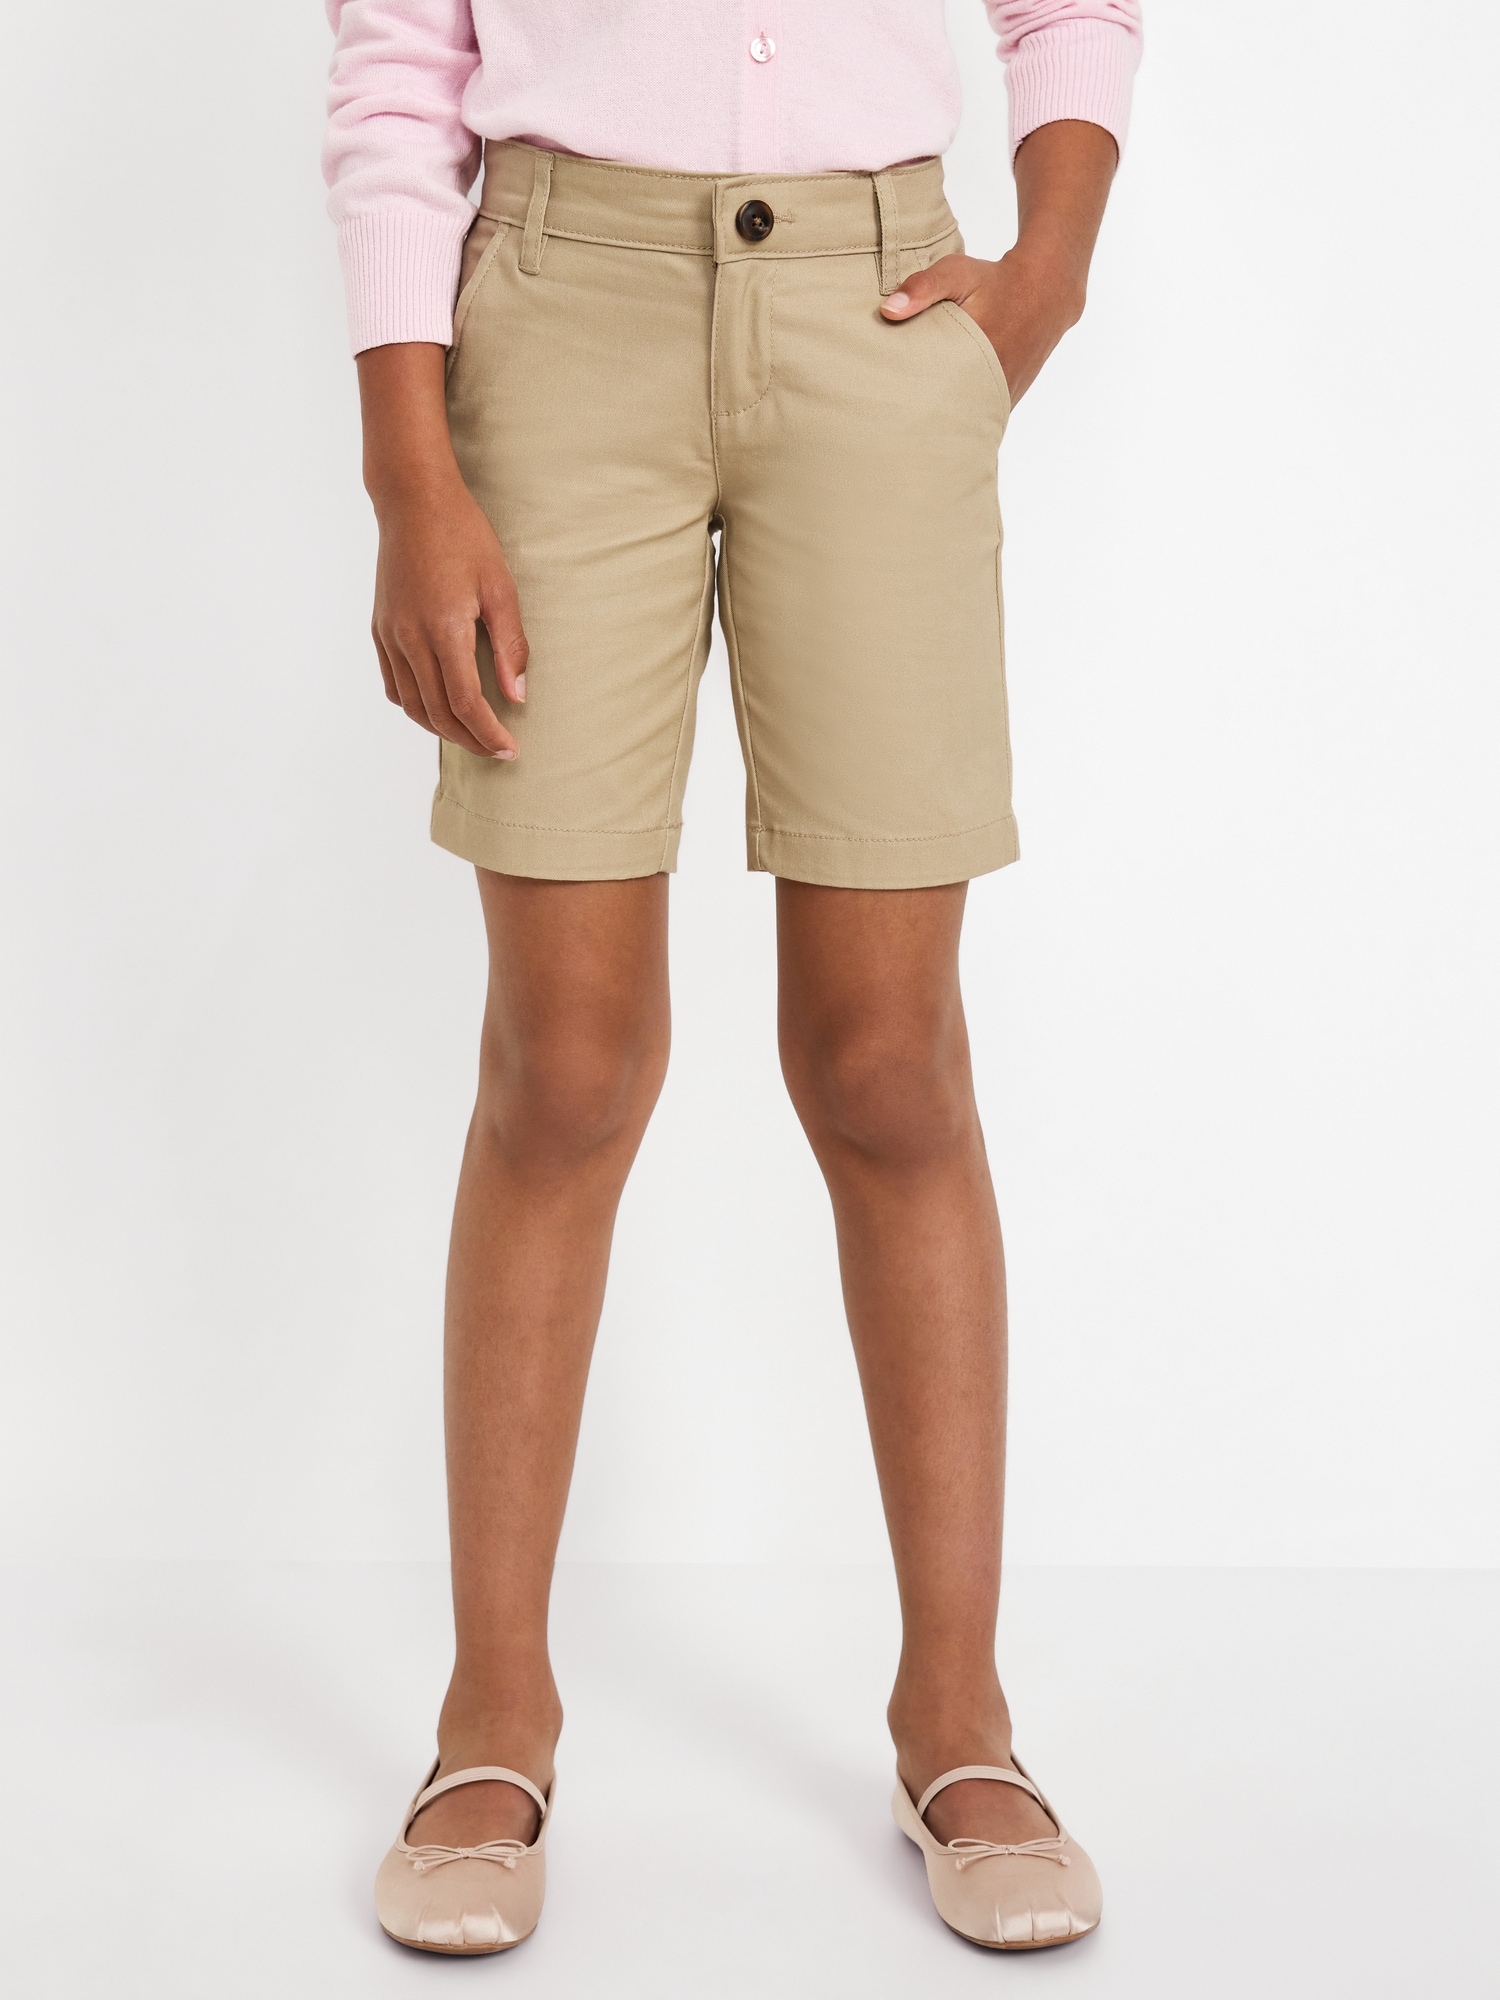 School Uniform Twill Bermuda Shorts for Girls Hot Deal